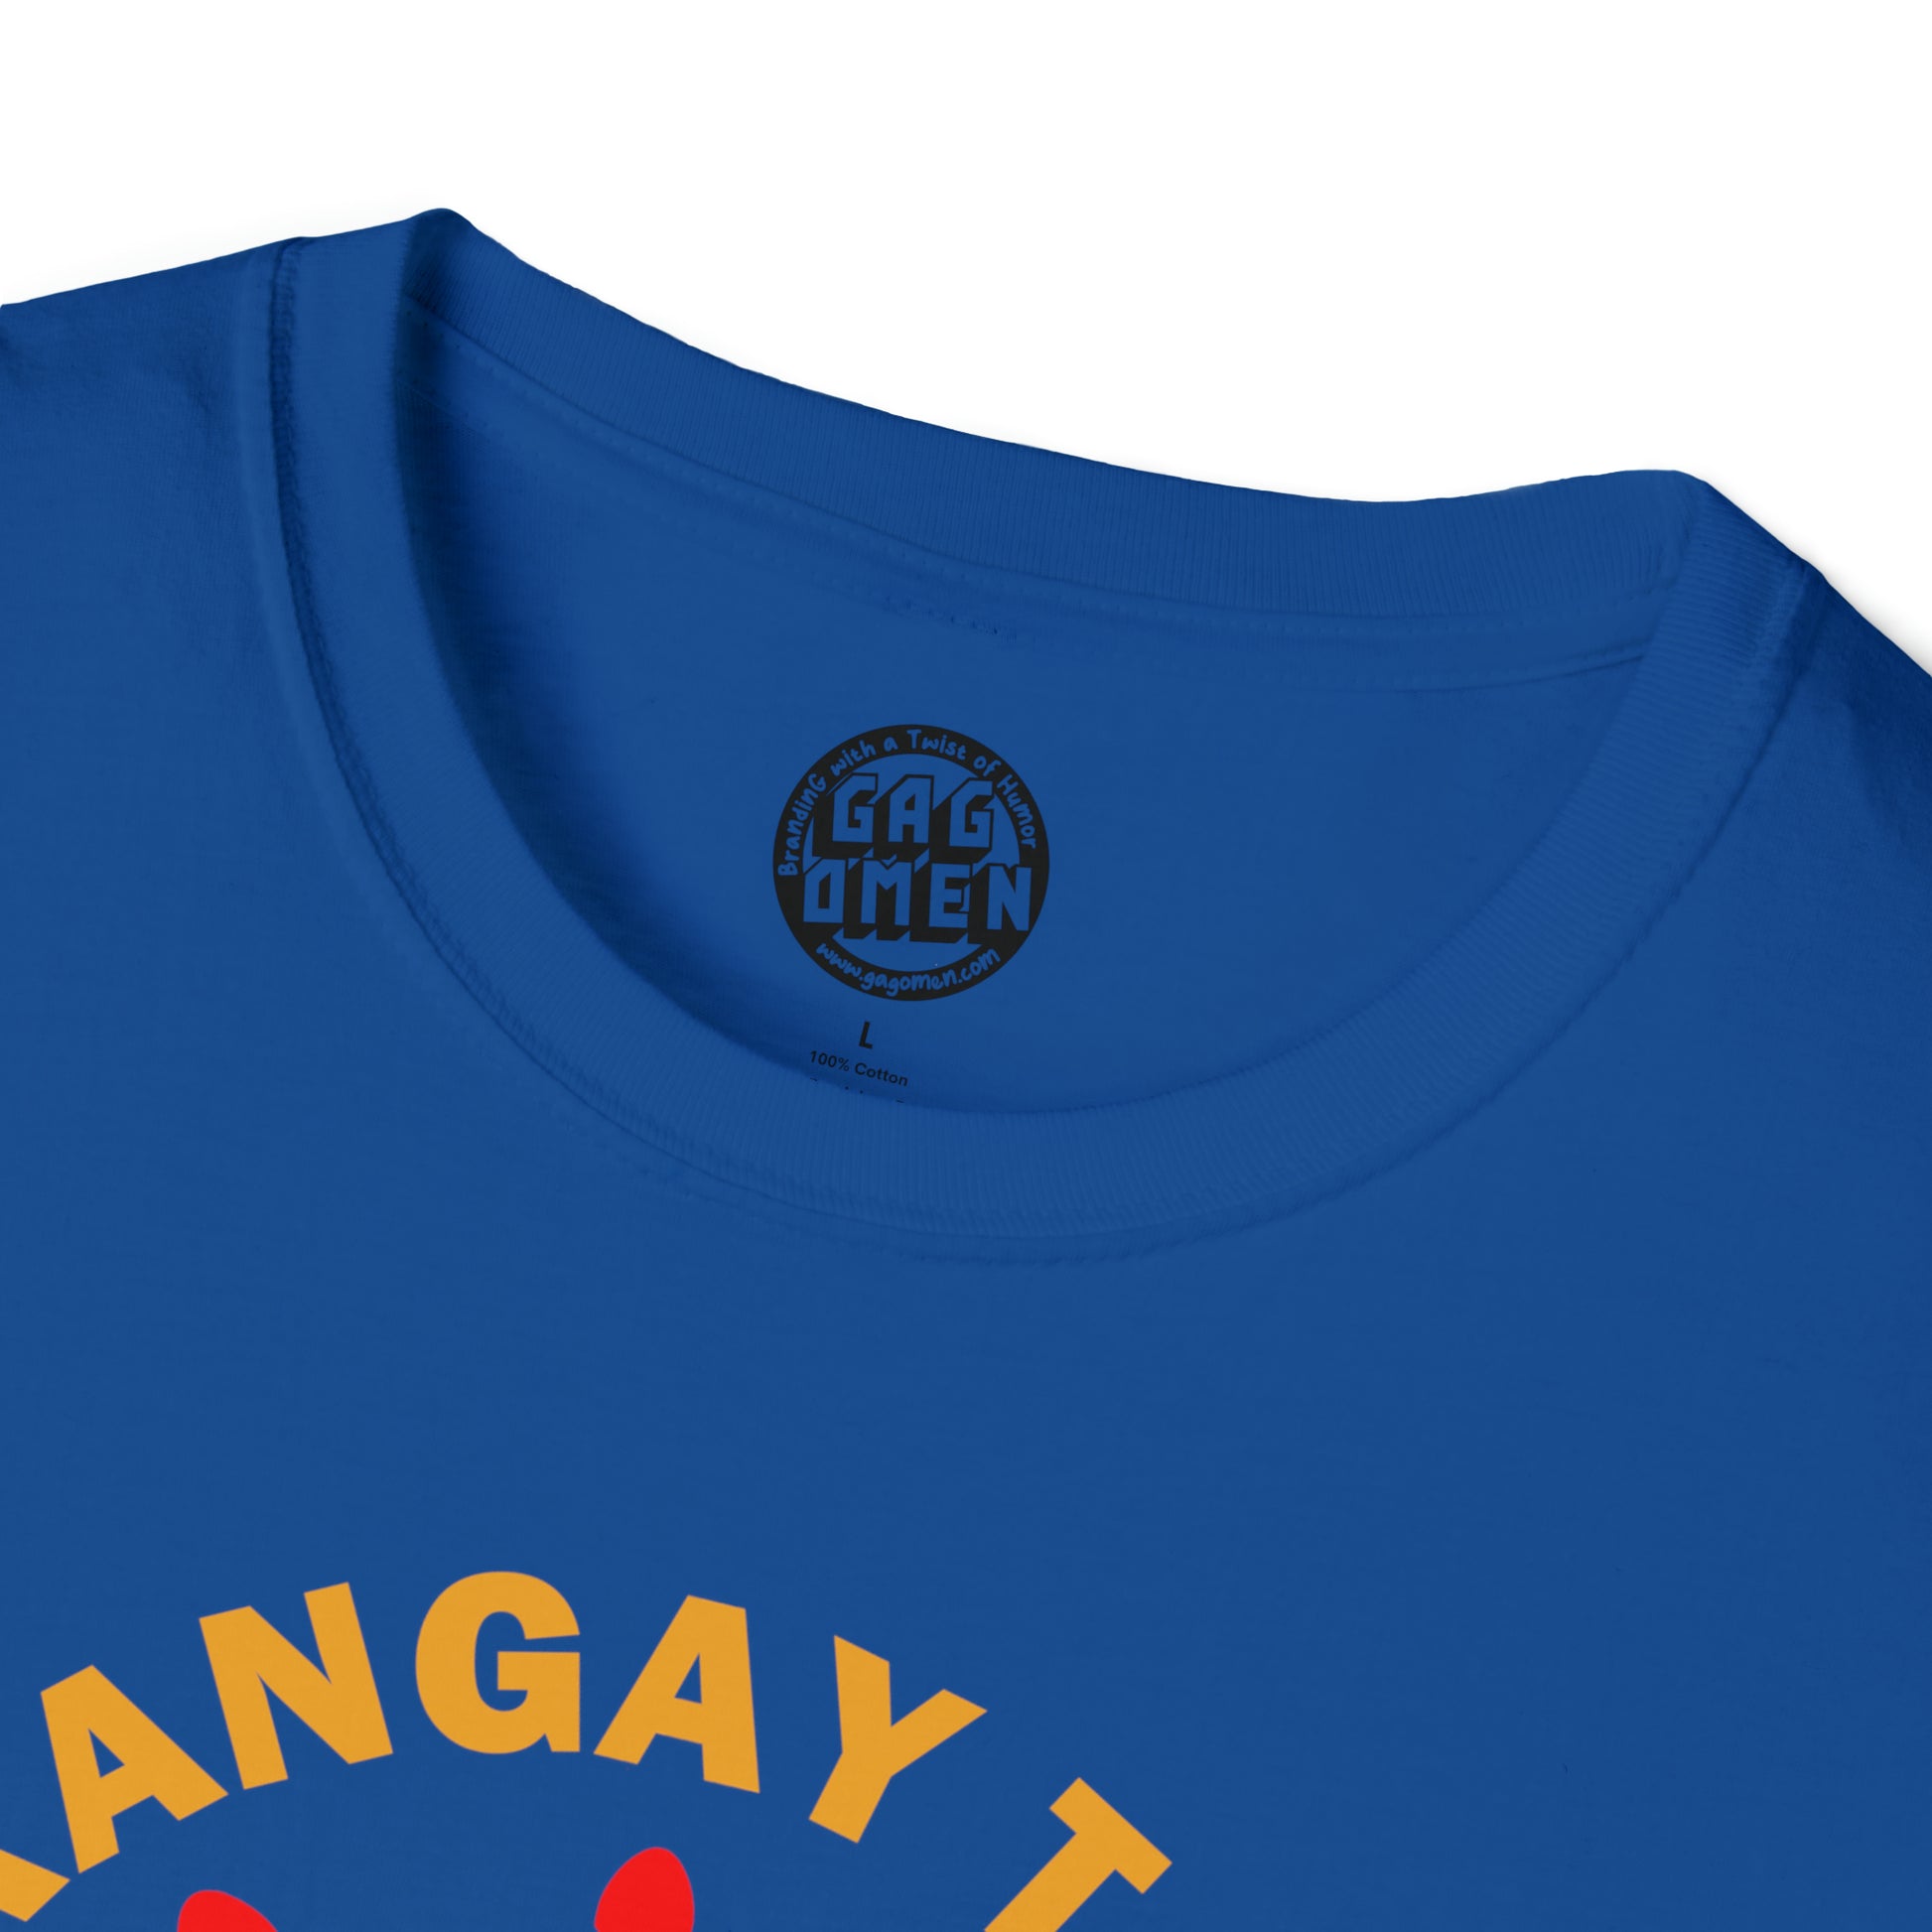 Barangay tanod t-shirts, brgy tanod t-shirt usa, barangay t-shirt usa, Funny outdoor brand parody t-shirt, funny gift, meme t shirt, spoof, meme, Funny tee, hiking, camping, offroading, overlanding, brgy tanod